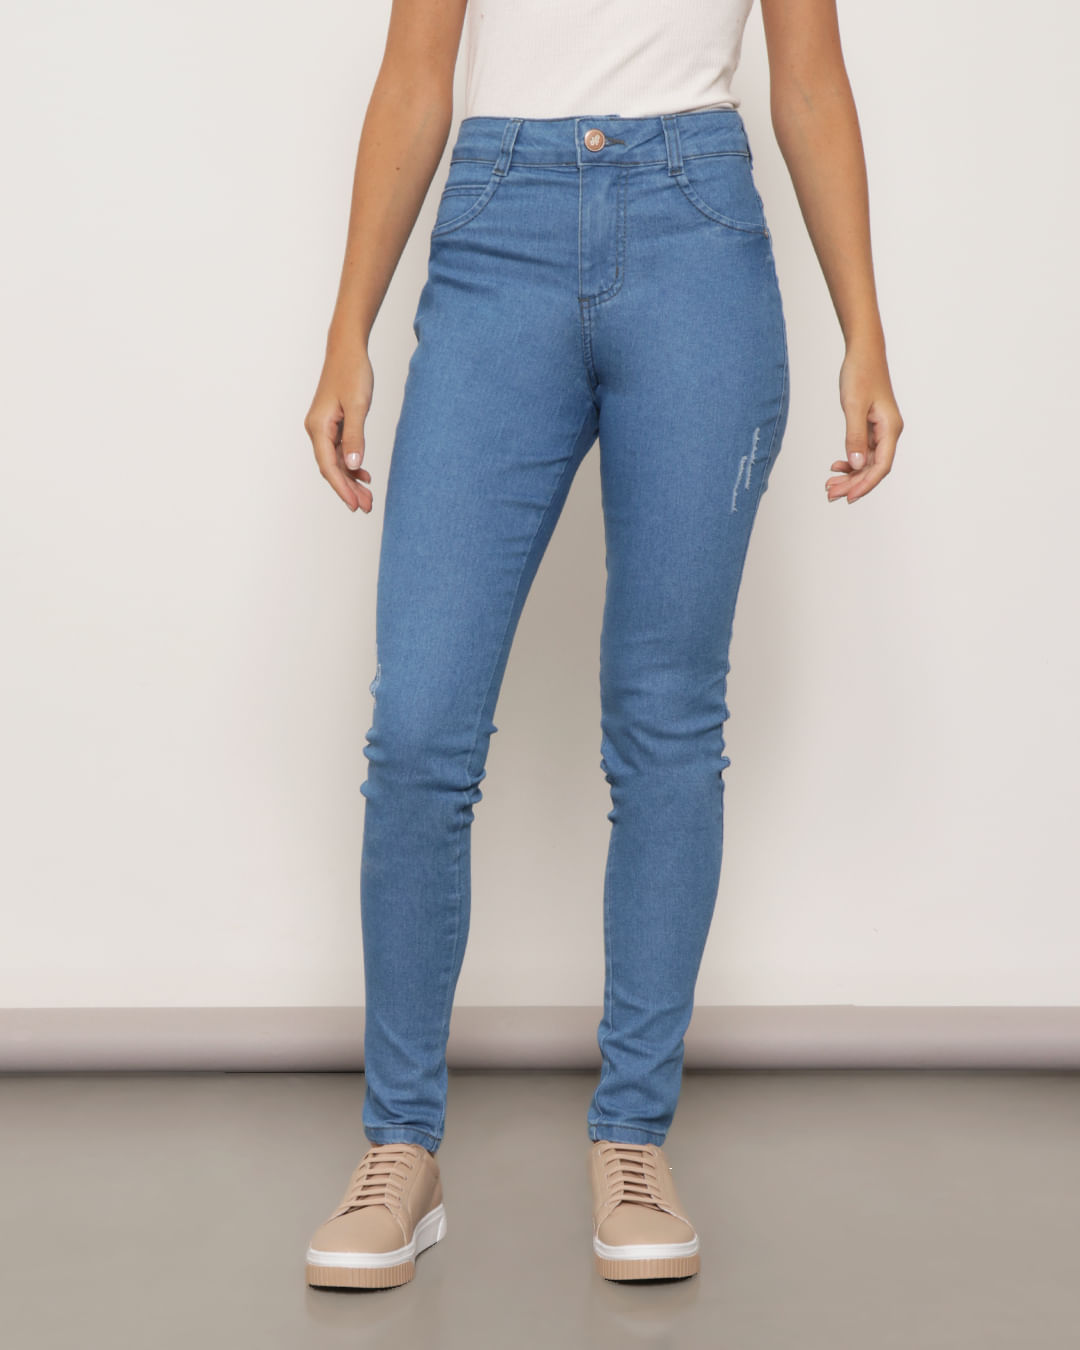 Calça Jeans Feminina Adulto Skinny Com Elastano 27201 Biotipo Jeans 36 -  Malhas Ferju